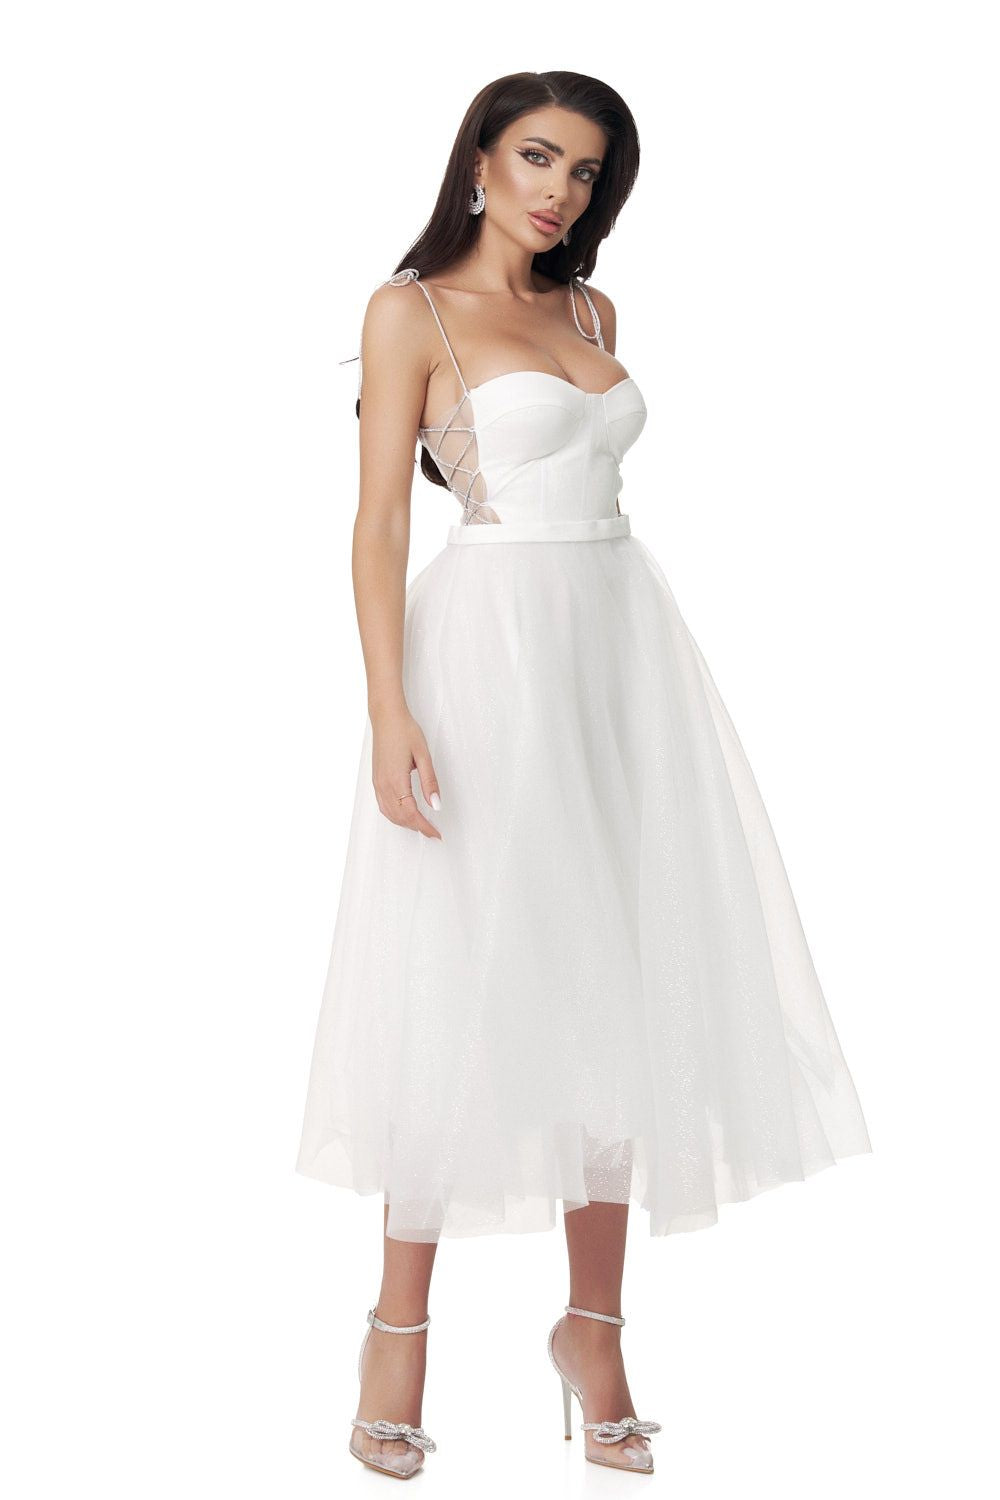 Yuriko Bogas medium white lady dress